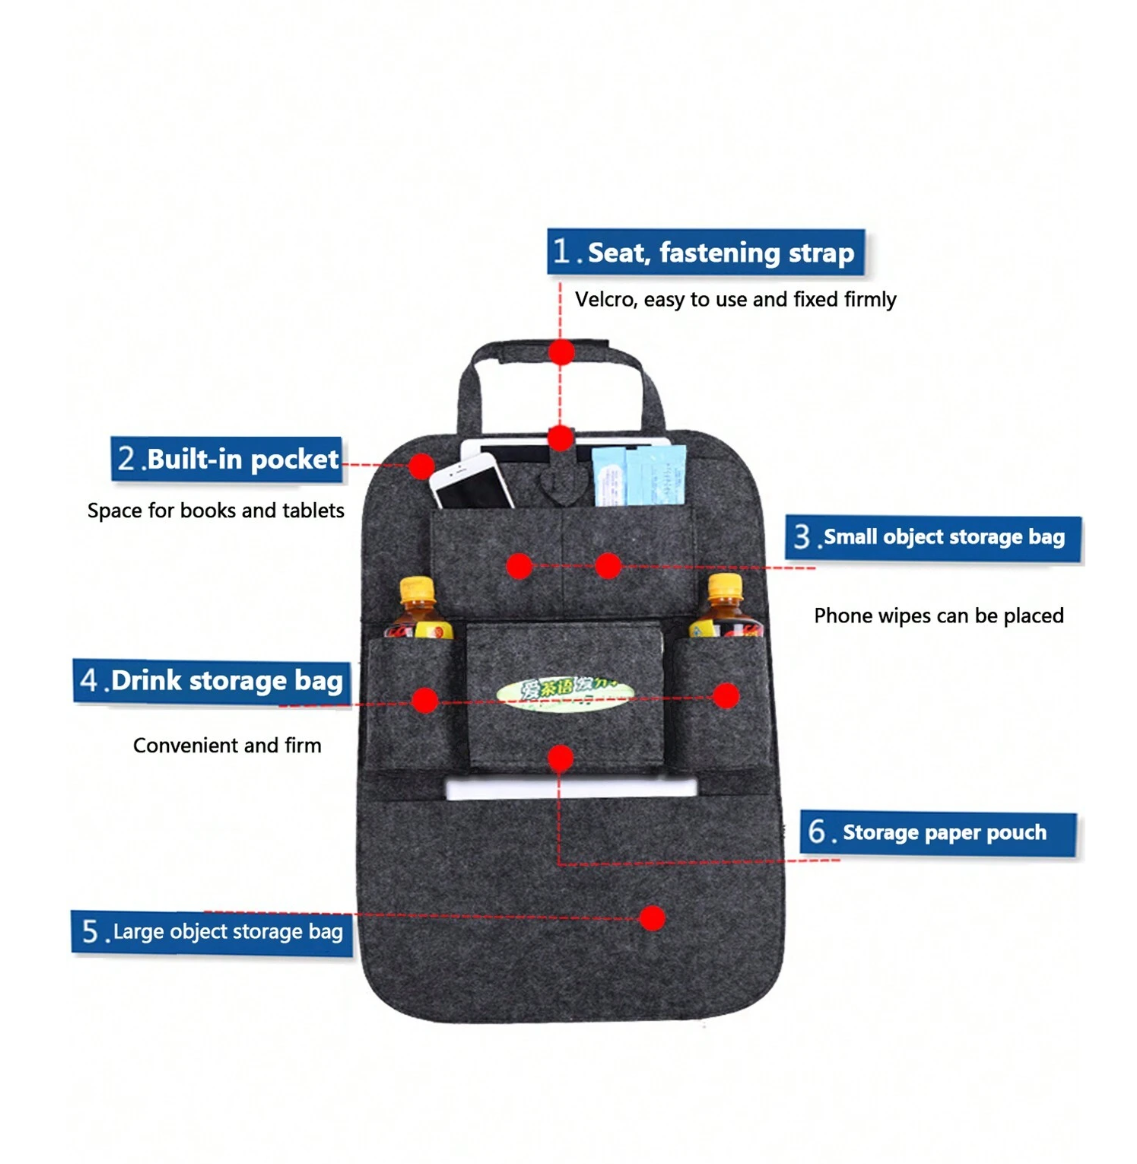 Drive-In Harmony: Multi-functional Car Headrest Organizer & Interior Creativity Bag